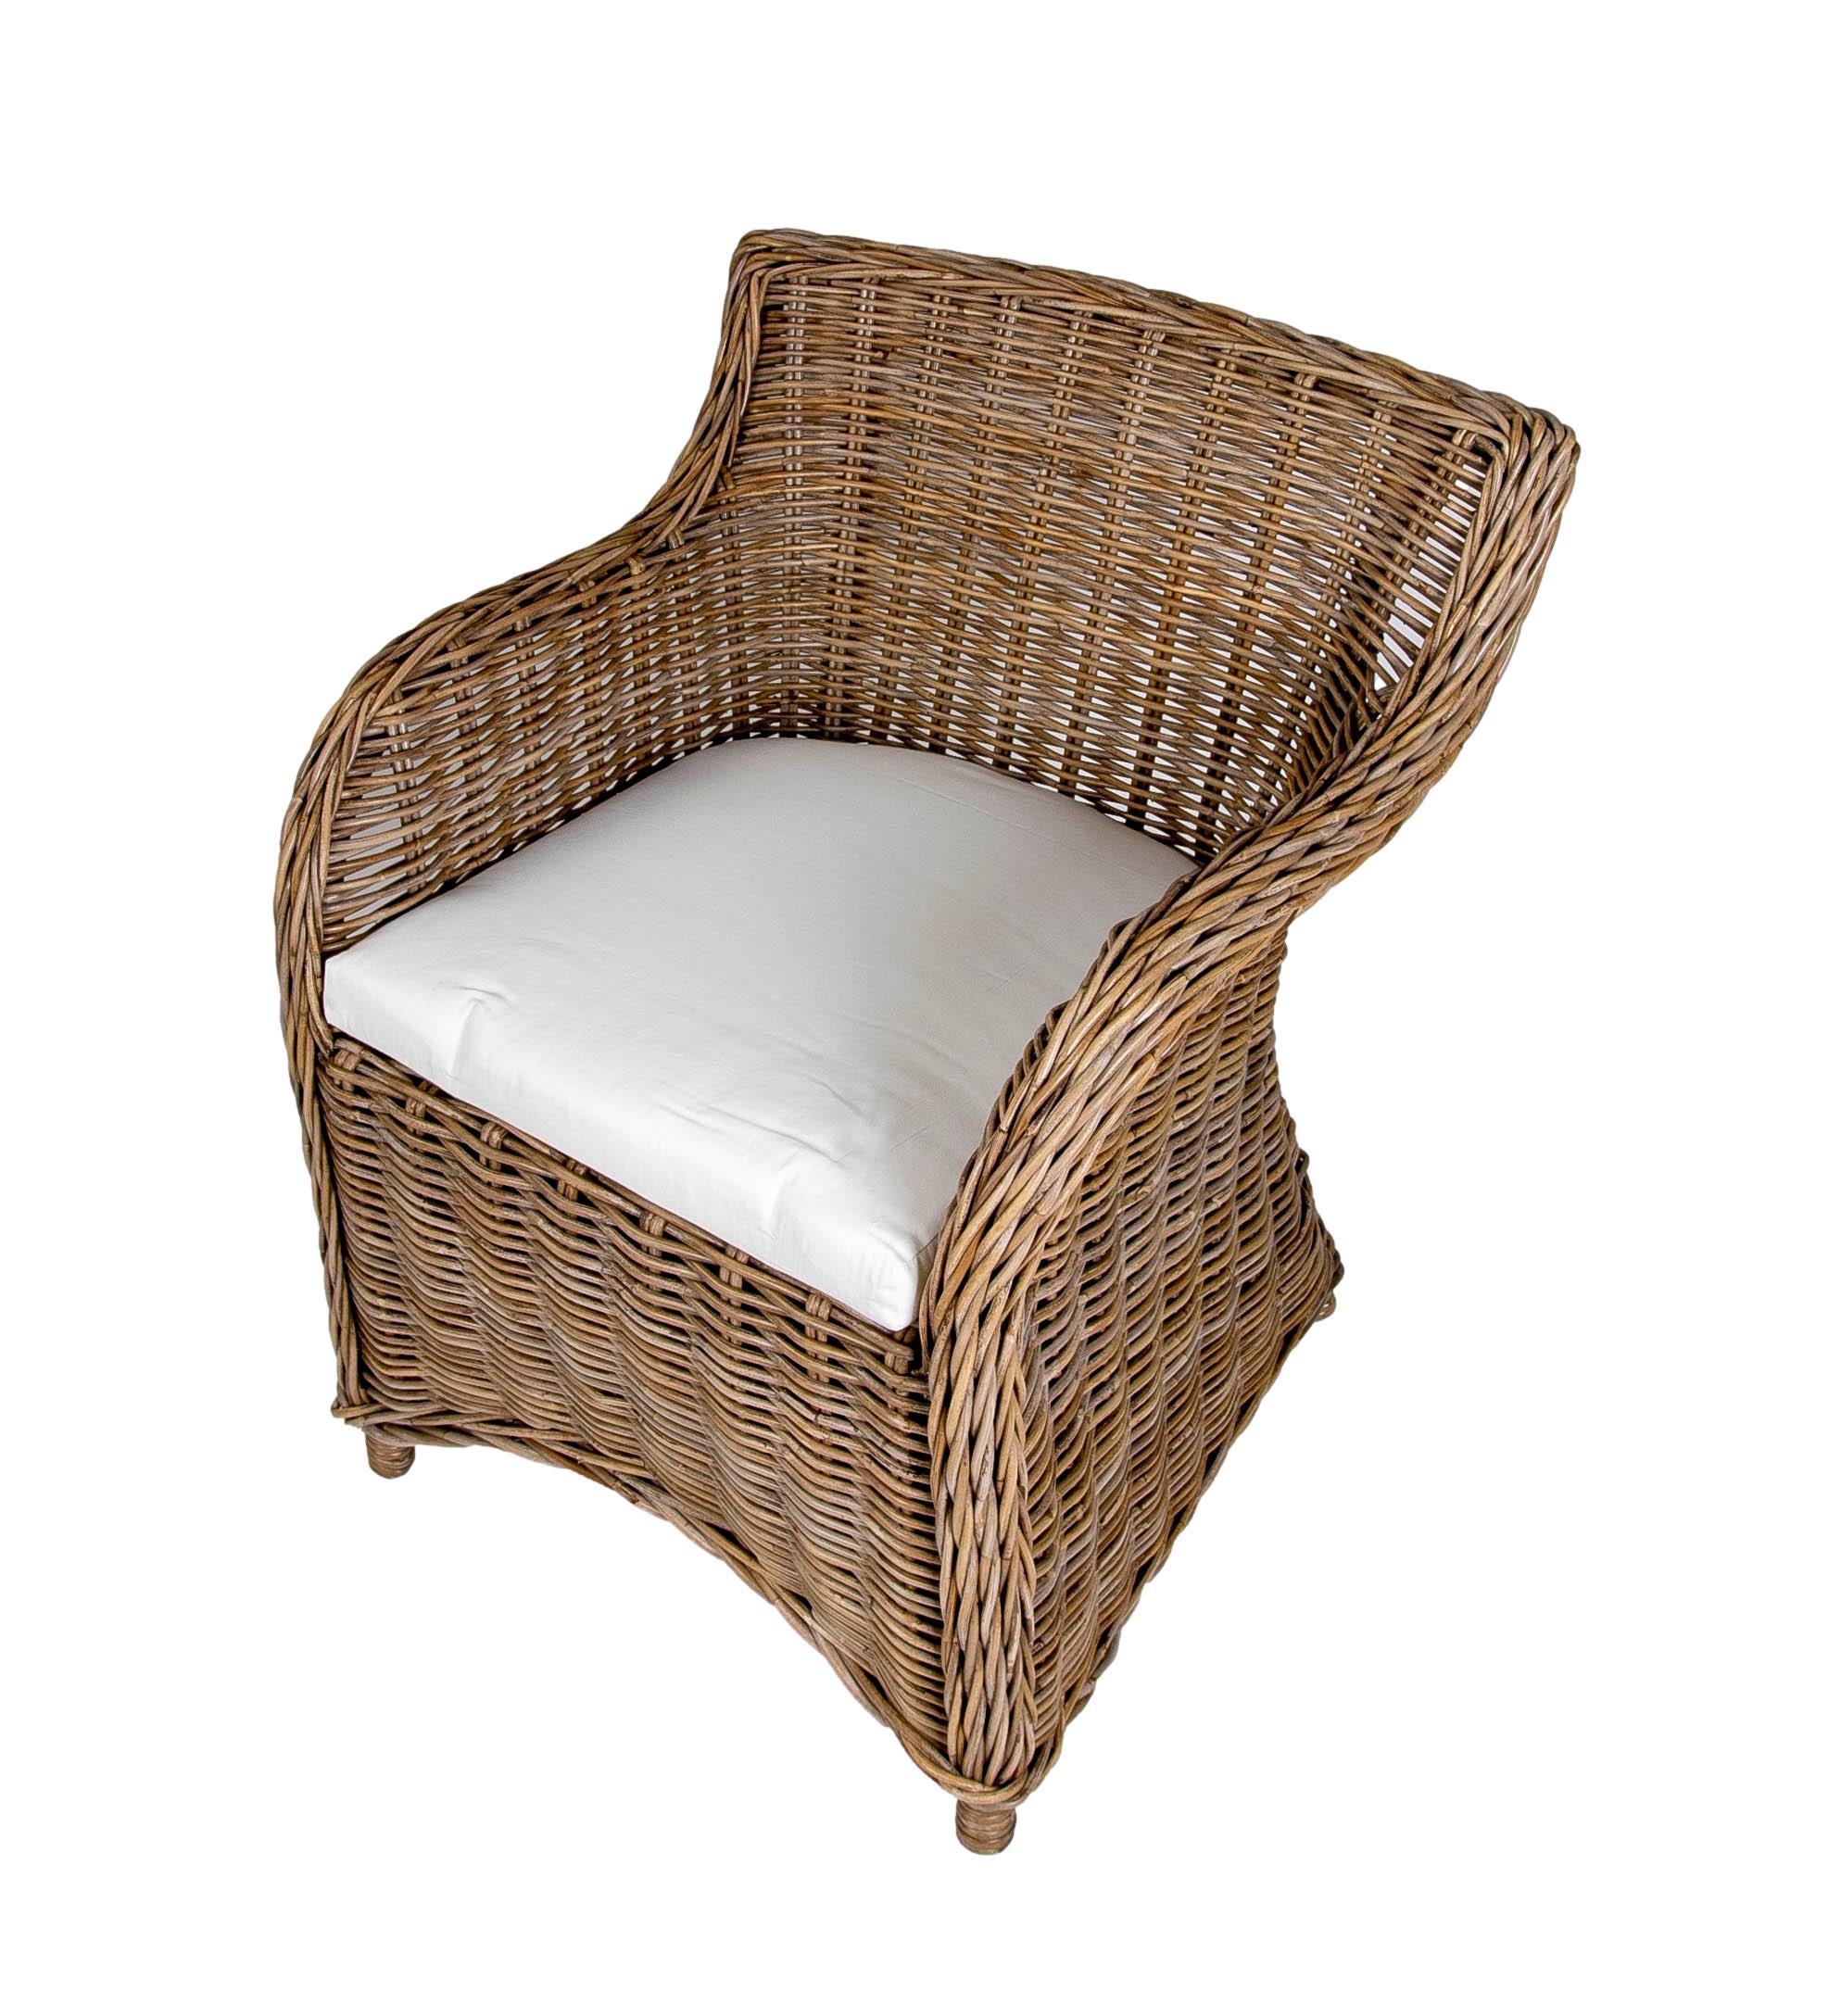  Rattan Garden Chair with Cushion in Greyish Tone For Sale 4